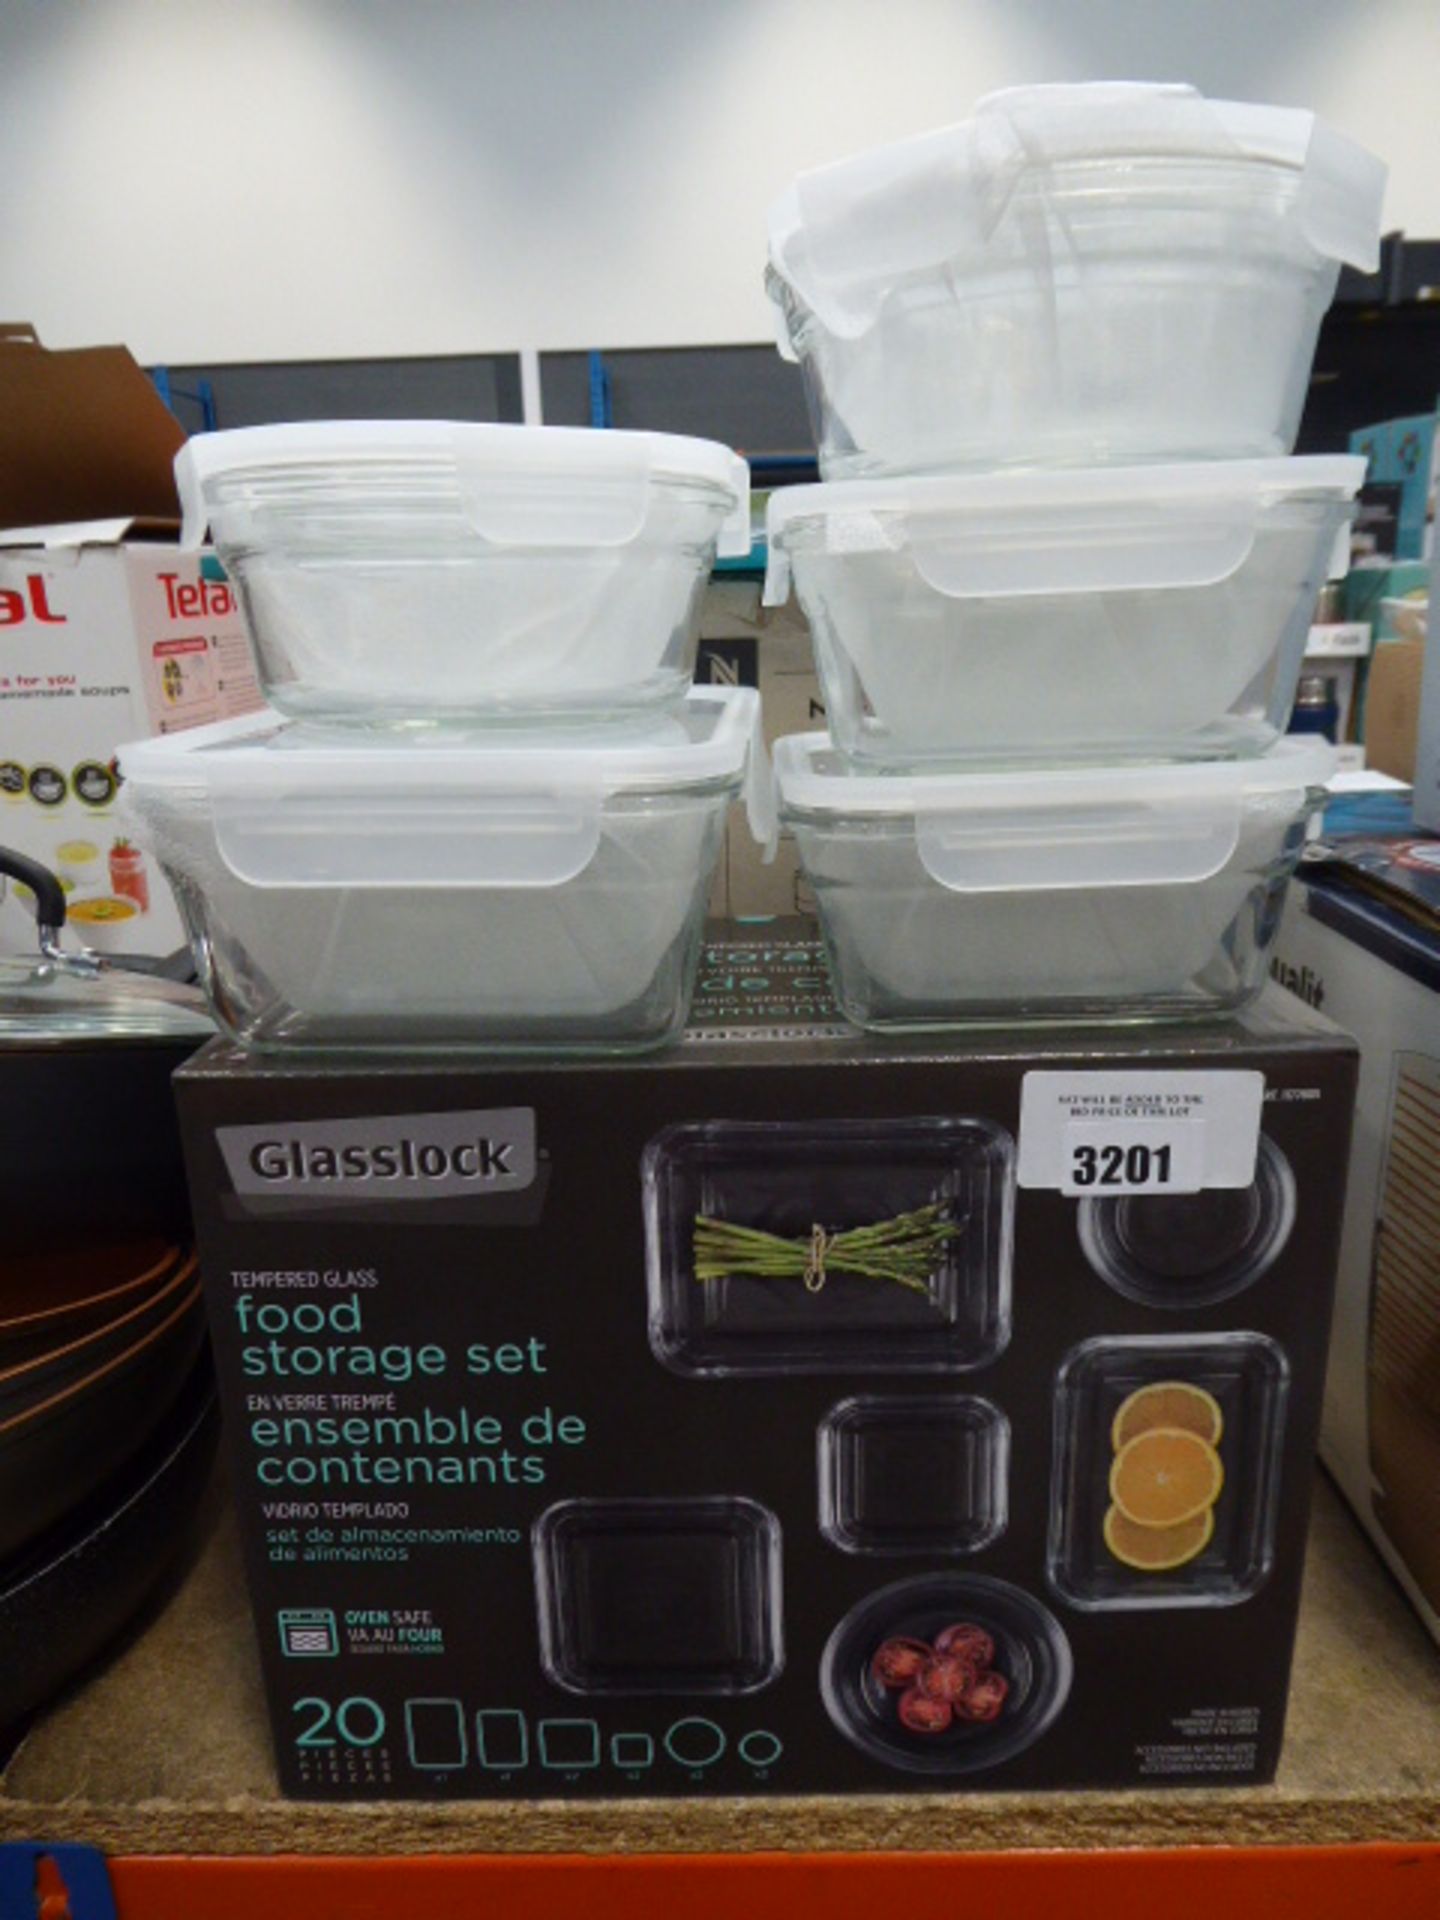 Boxed Glasslock food storage set